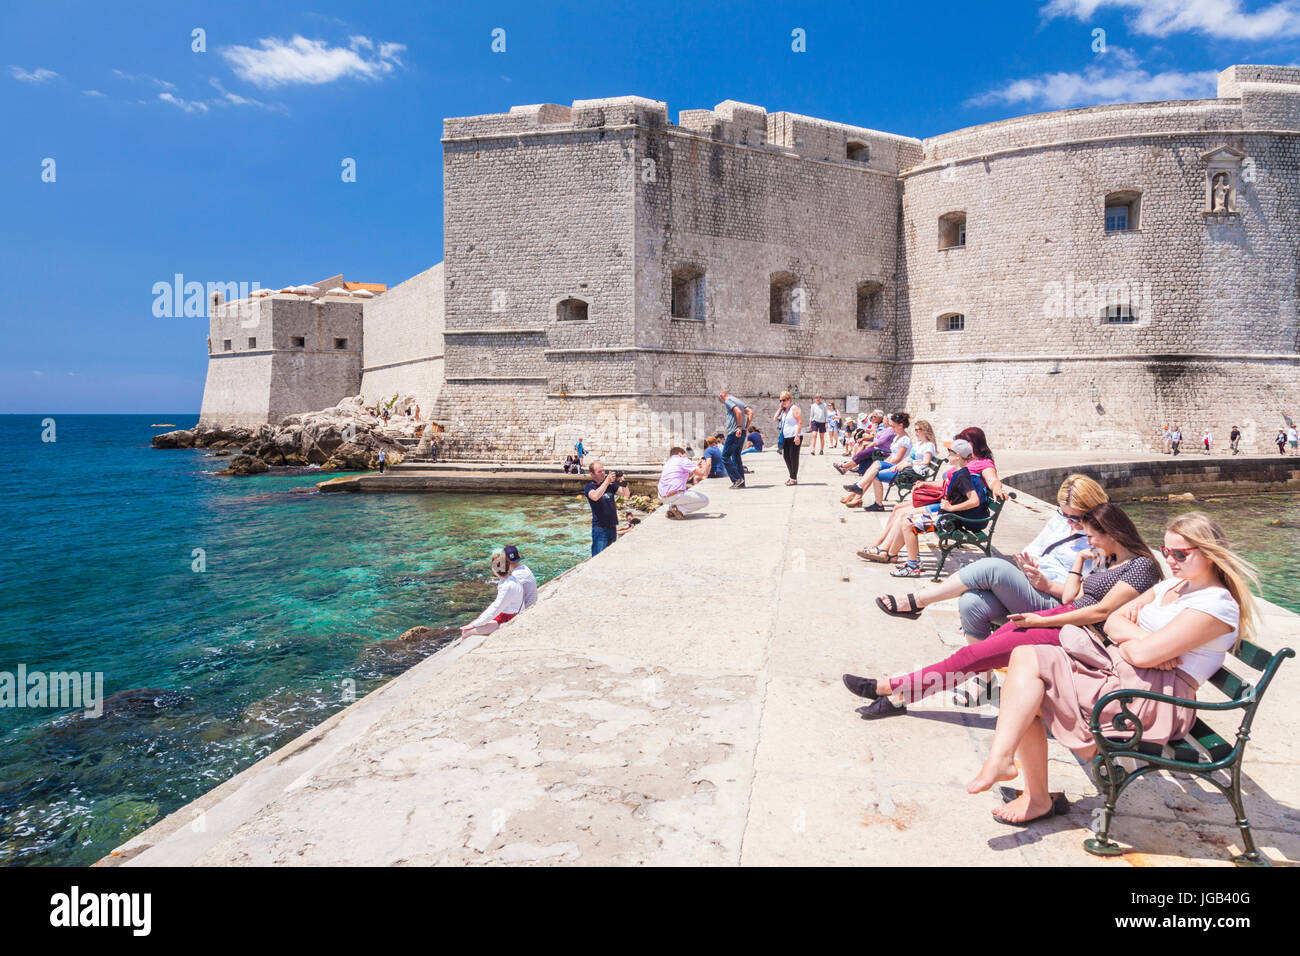 Kroatien Dubrovnik Kroatien Dalmatien Touristen sitzen auf dem Deich Arsenal St John Fort Dubrovnik Altstadt Hafen Stadt Wände Altstadt Dubrovnik Stockfoto